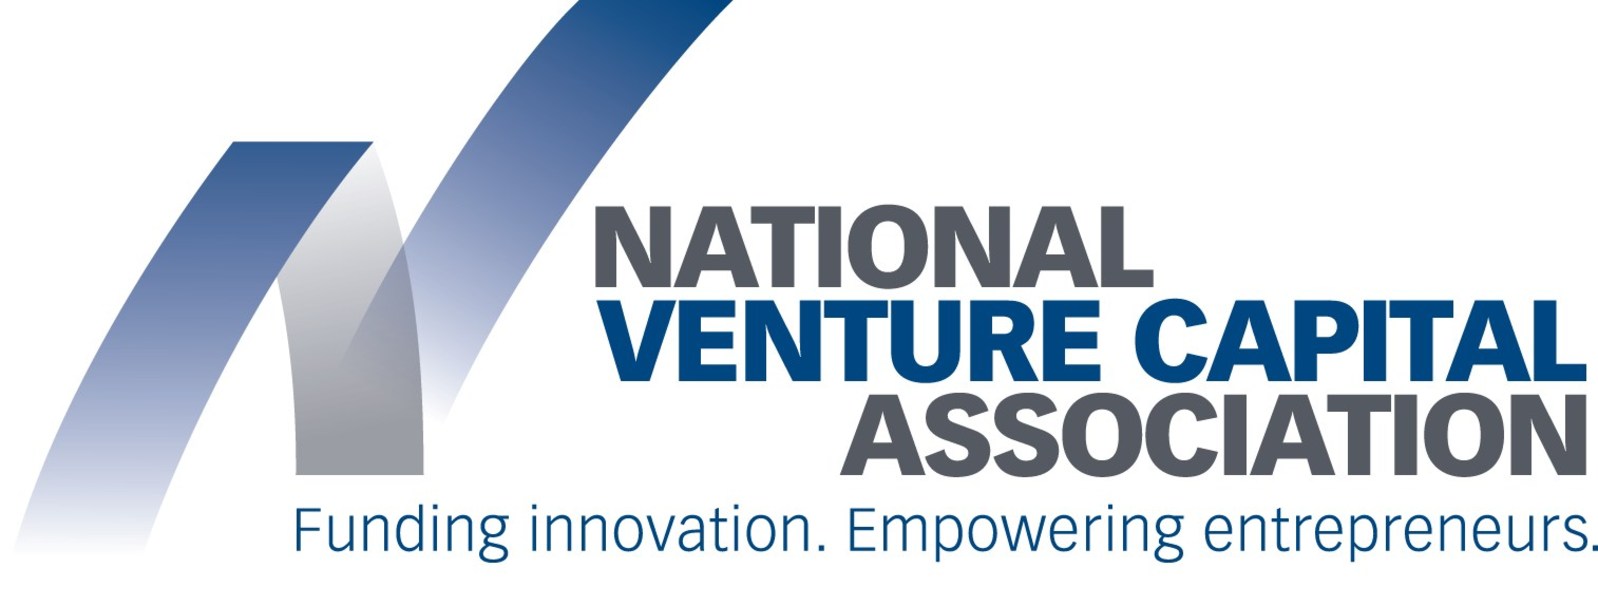 National Venture Capital Association Logo - Events JP